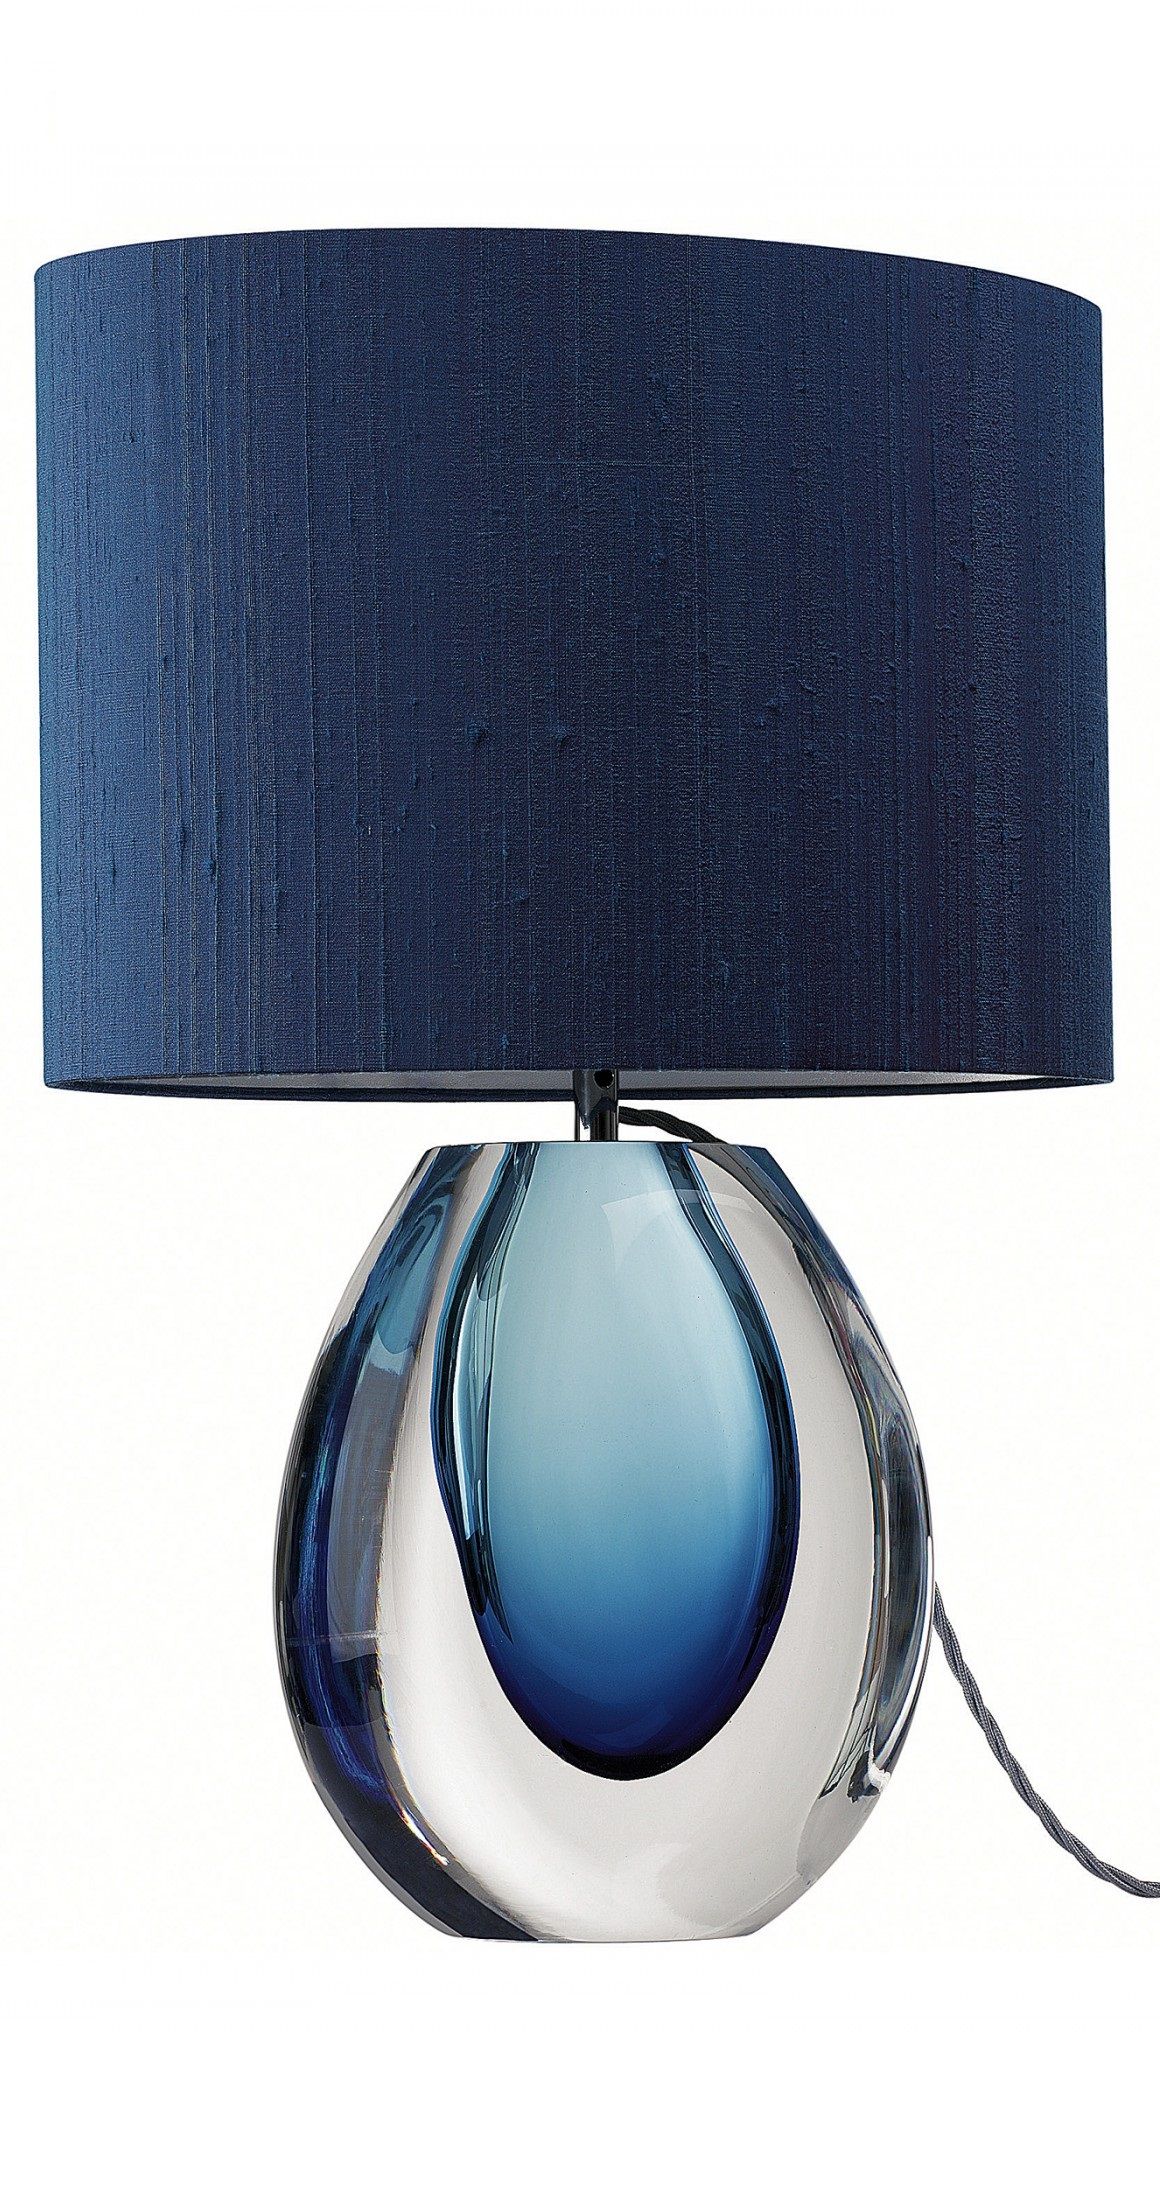 blue table lamps ideas